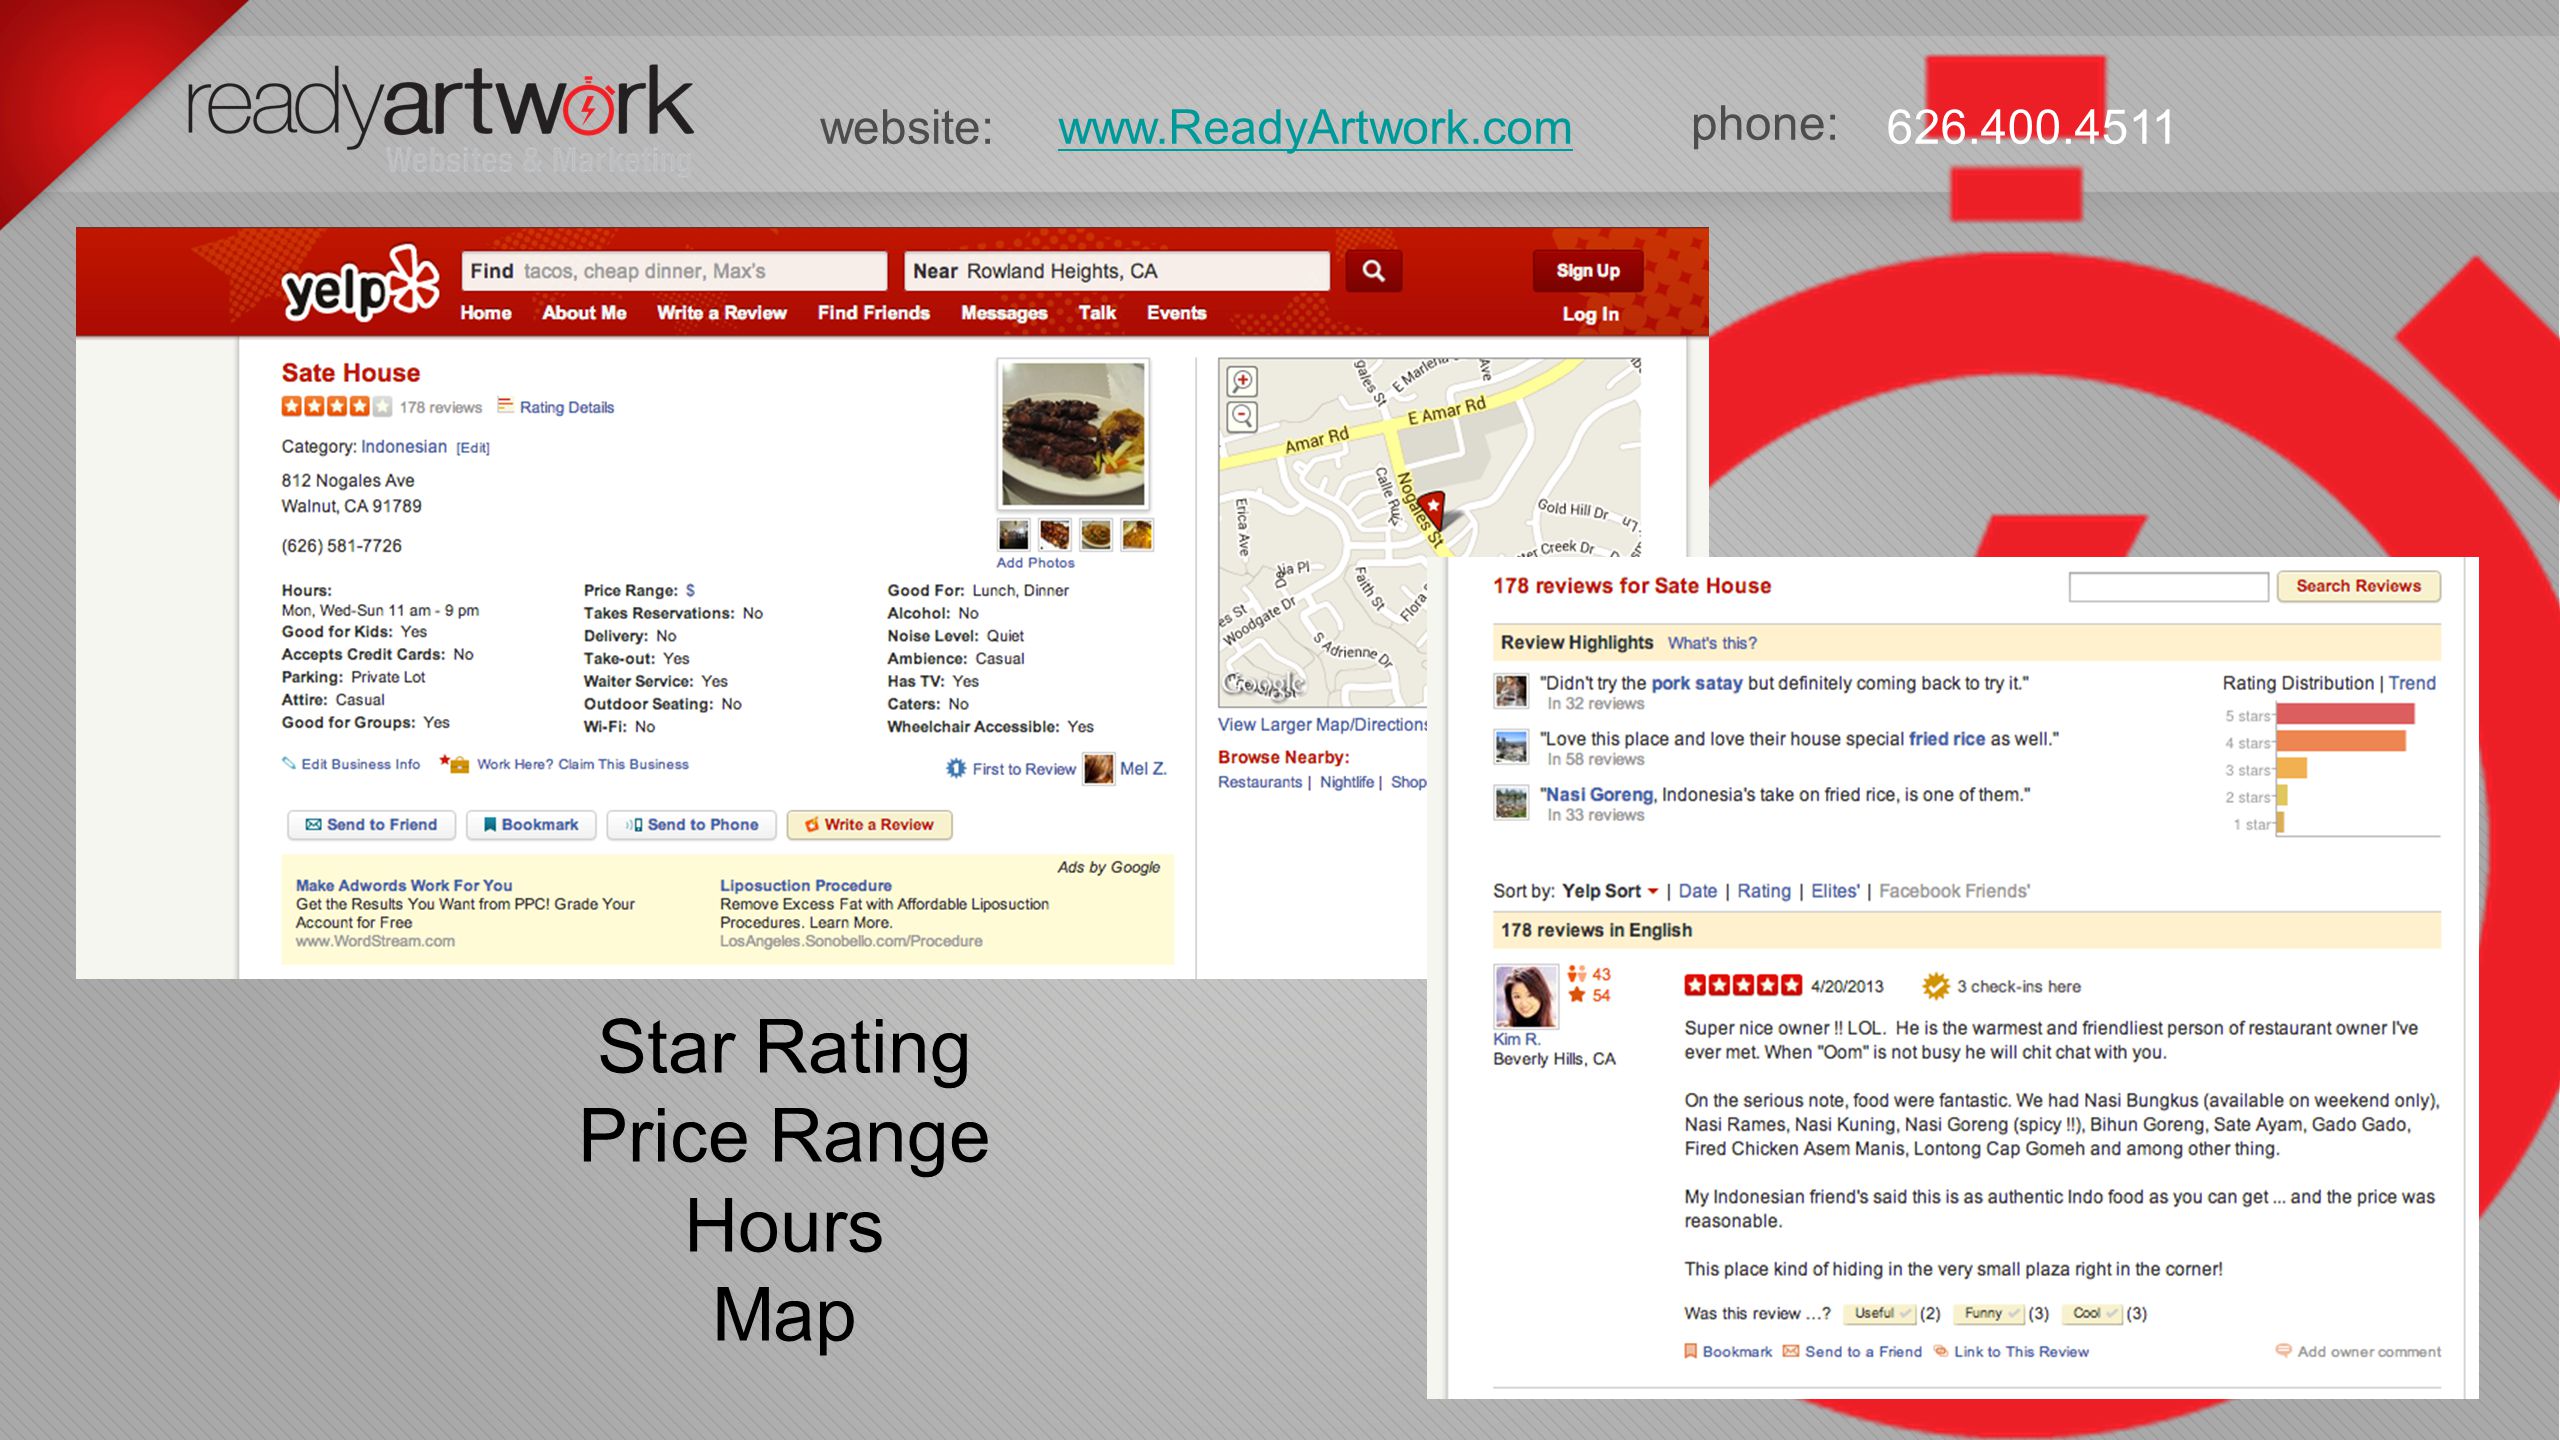 phone: website: Star Rating Price Range Hours Map